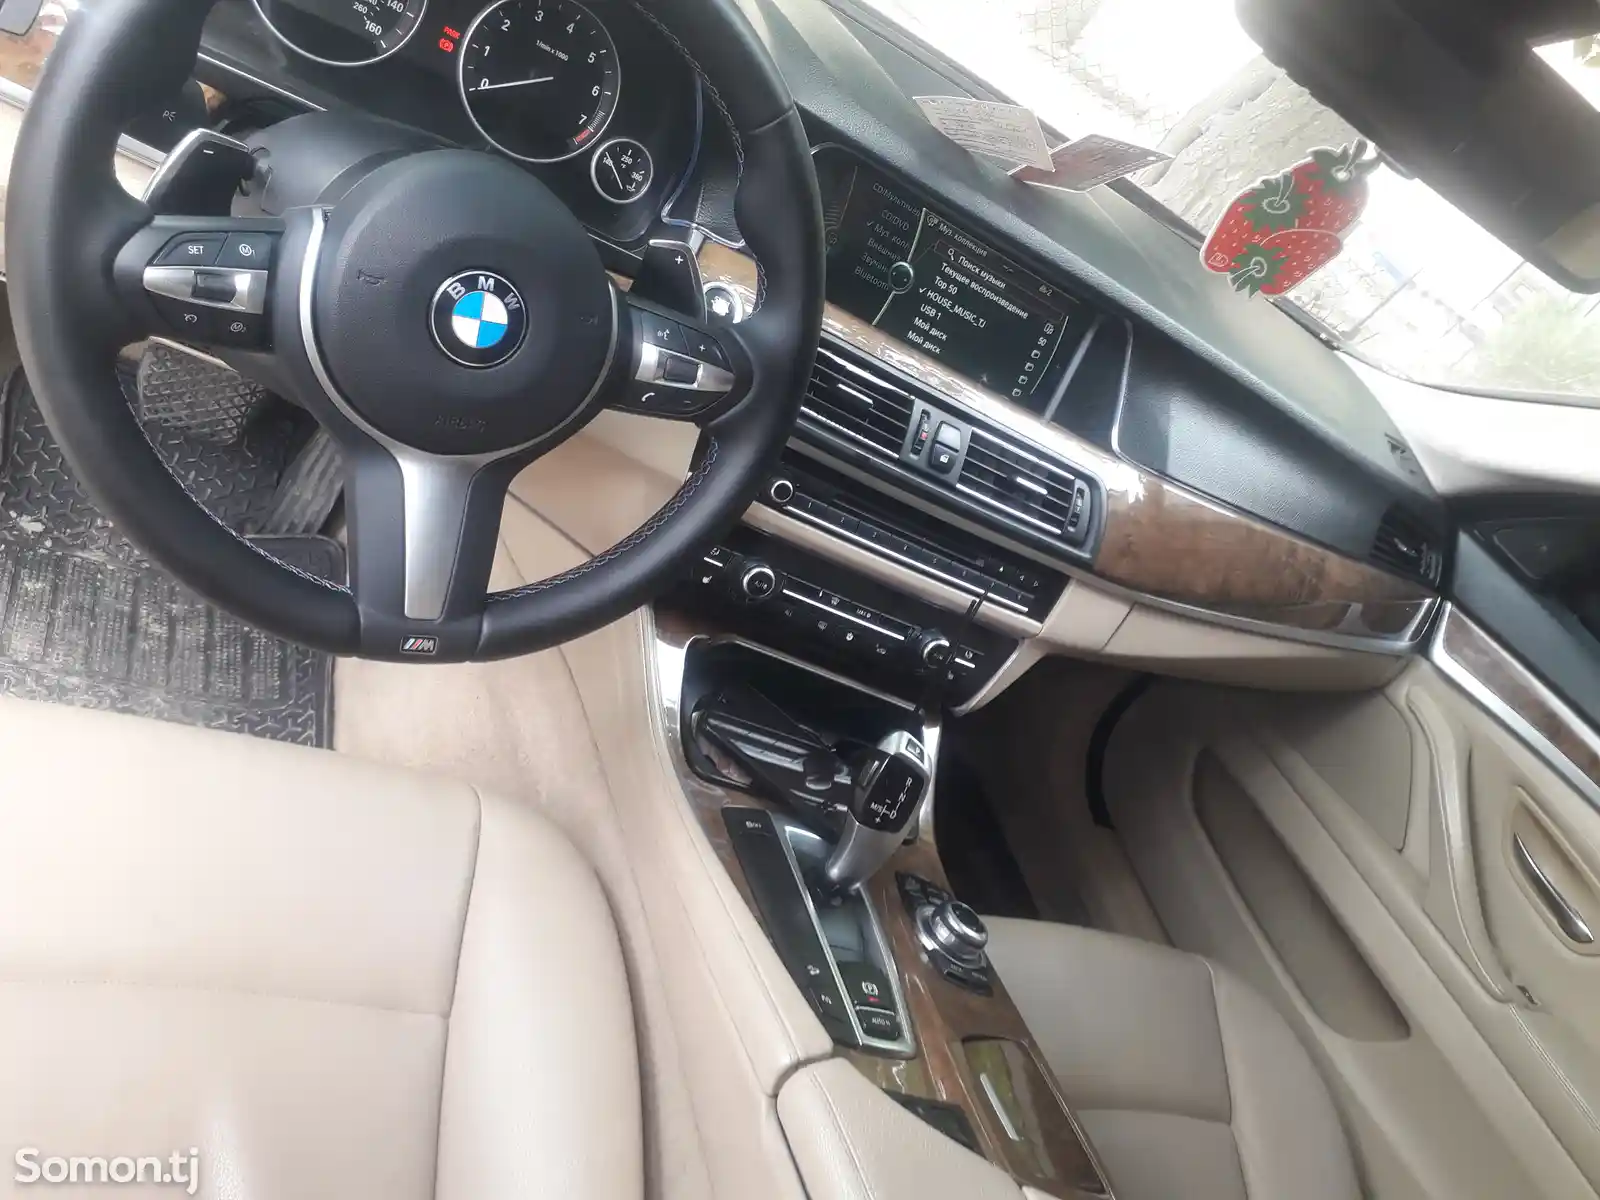 BMW 5 series, 2010-2